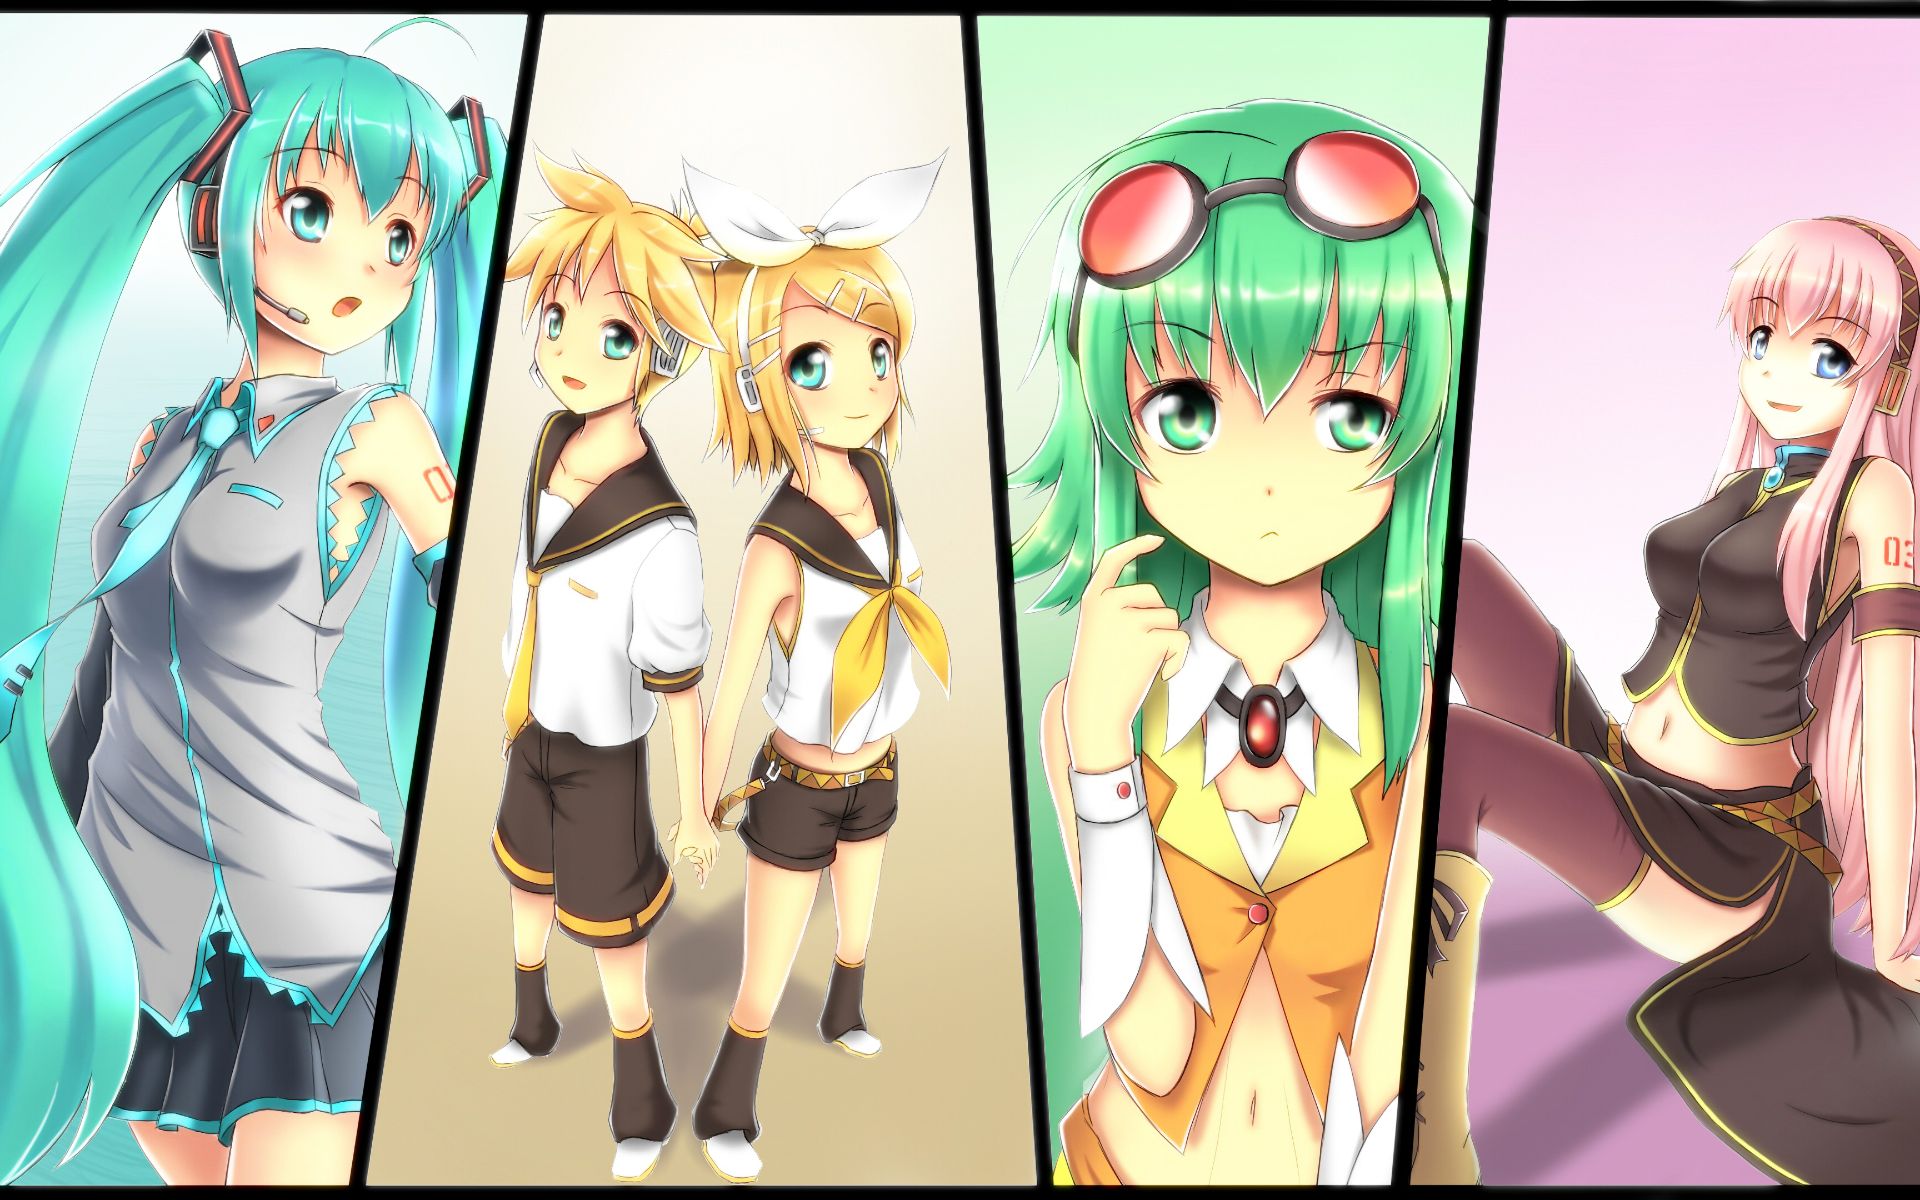 Descarga gratis la imagen Vocaloid, Luka Megurine, Animado, Hatsune Miku, Rin Kagamine, Gumi (Vocaloid), Len Kagamine en el escritorio de tu PC